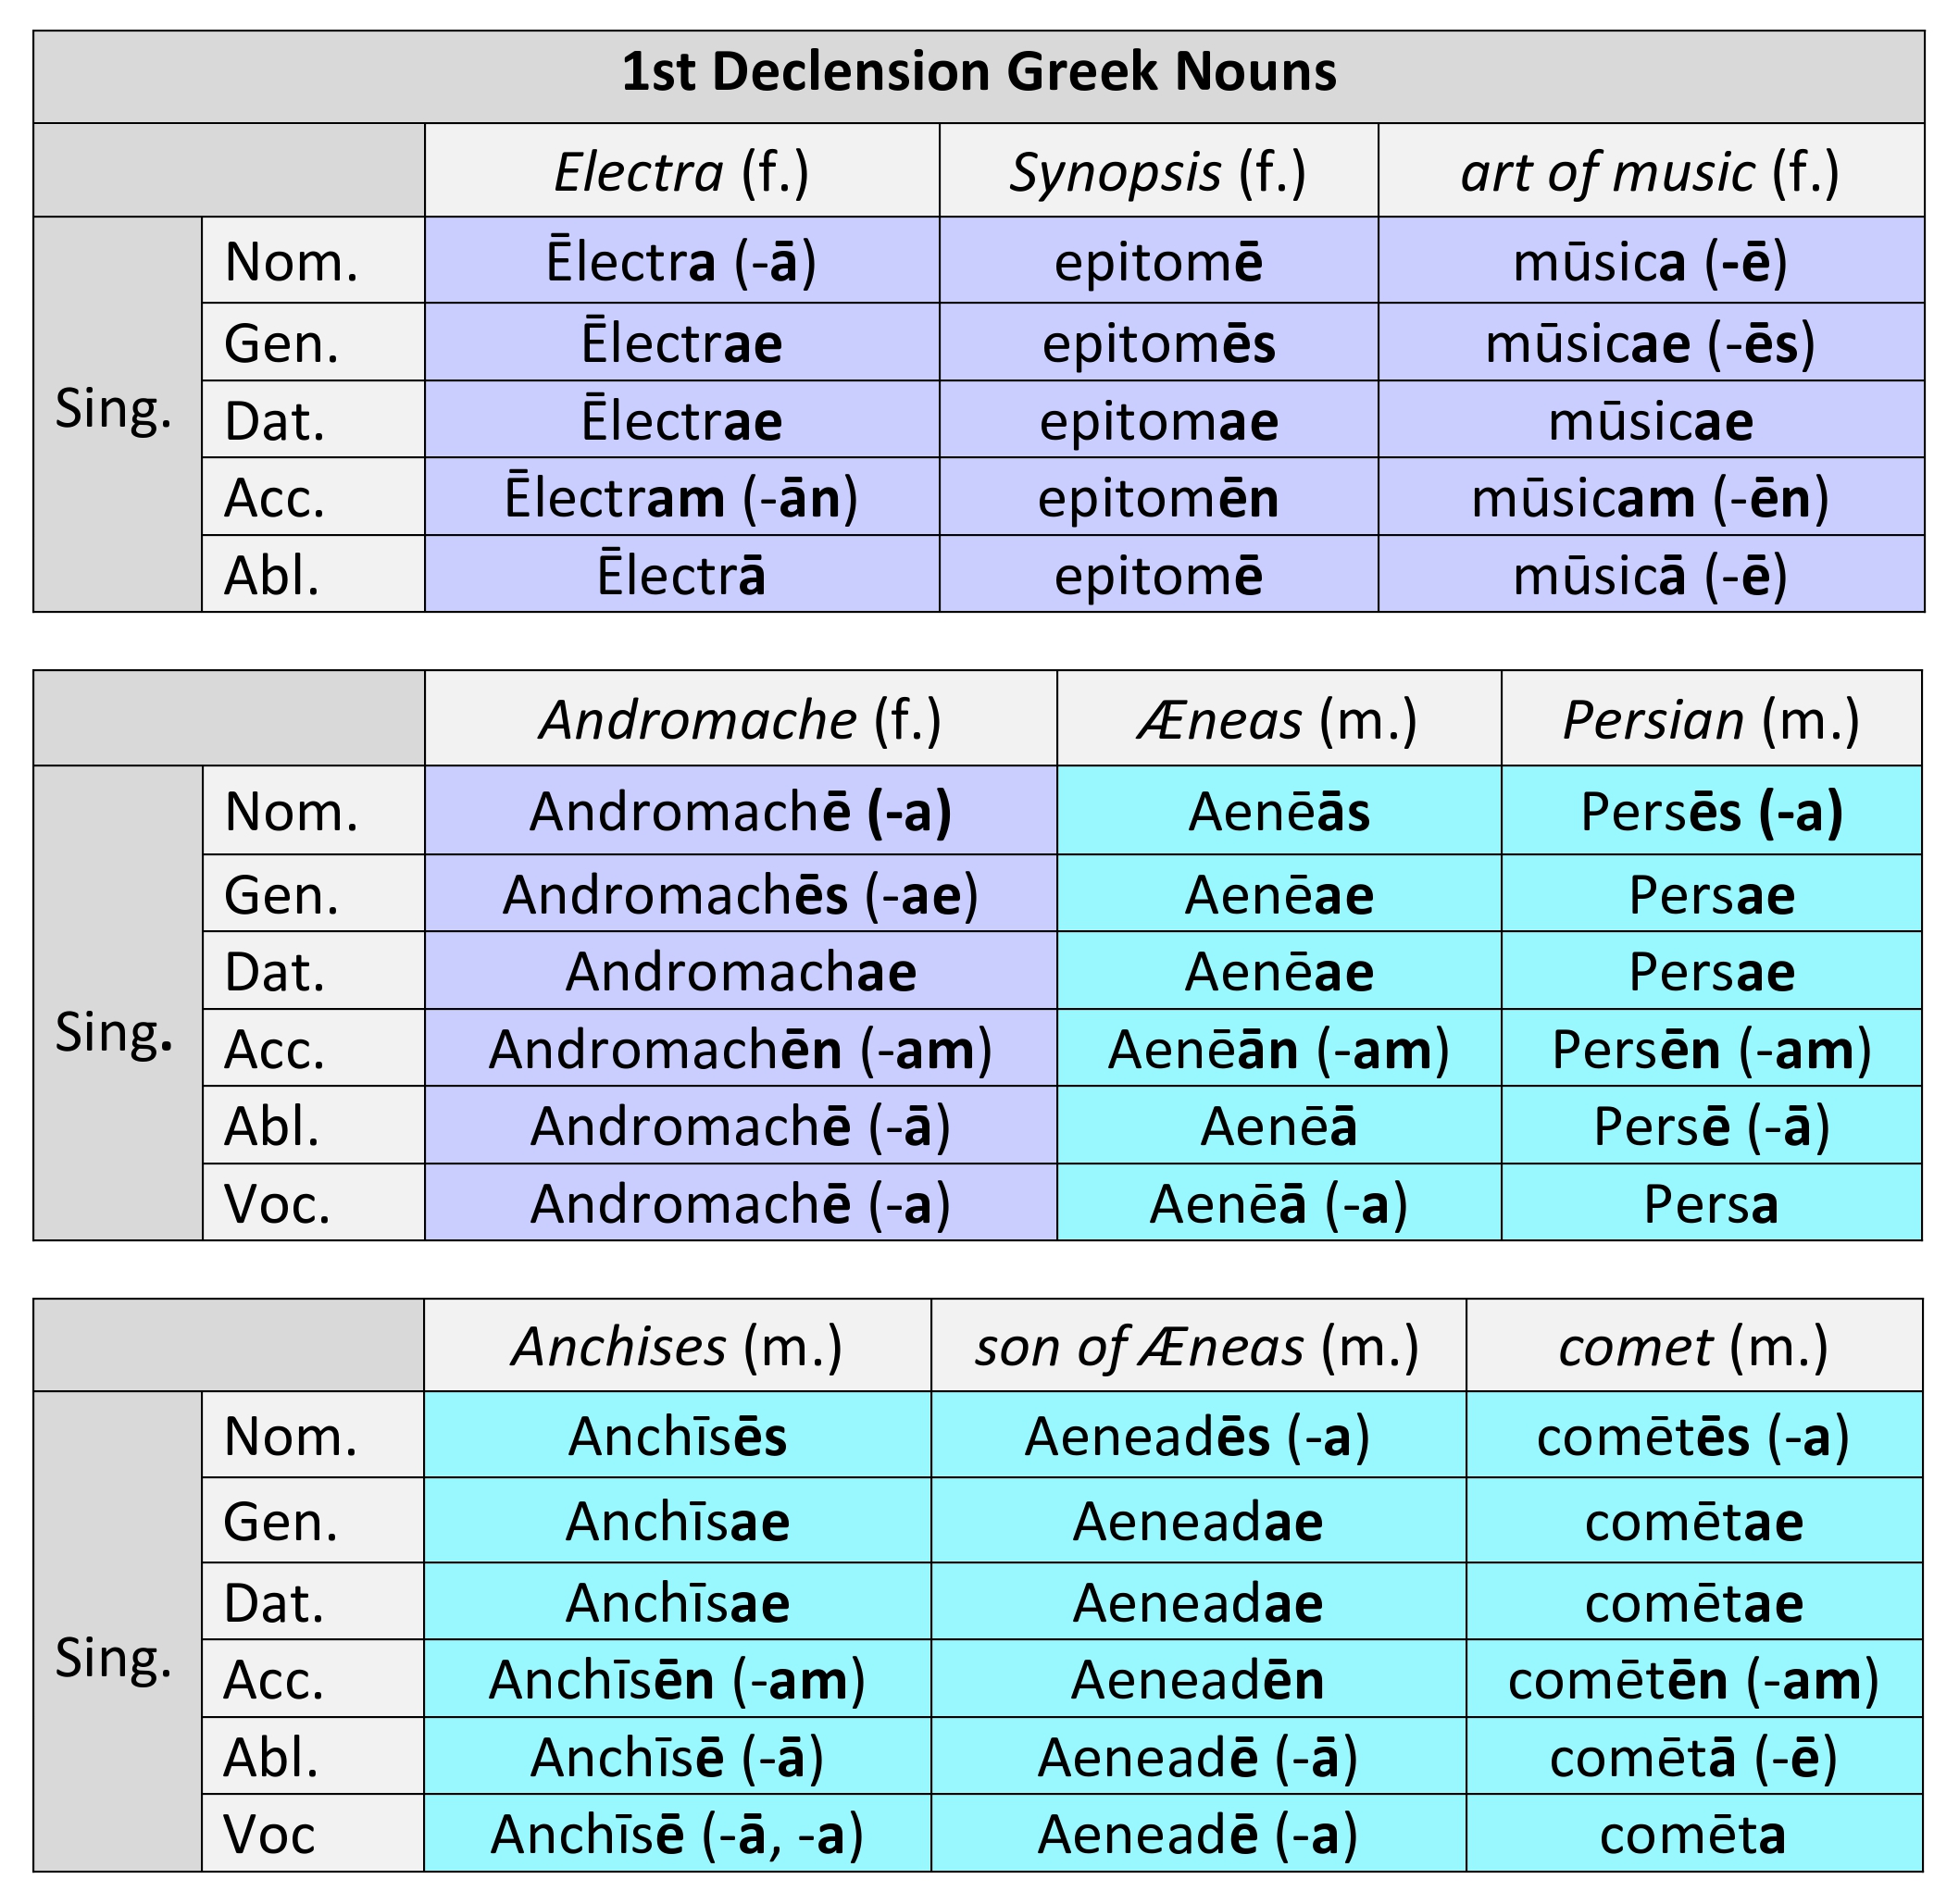 Paradigm for 1st declension nouns of Greek derivation